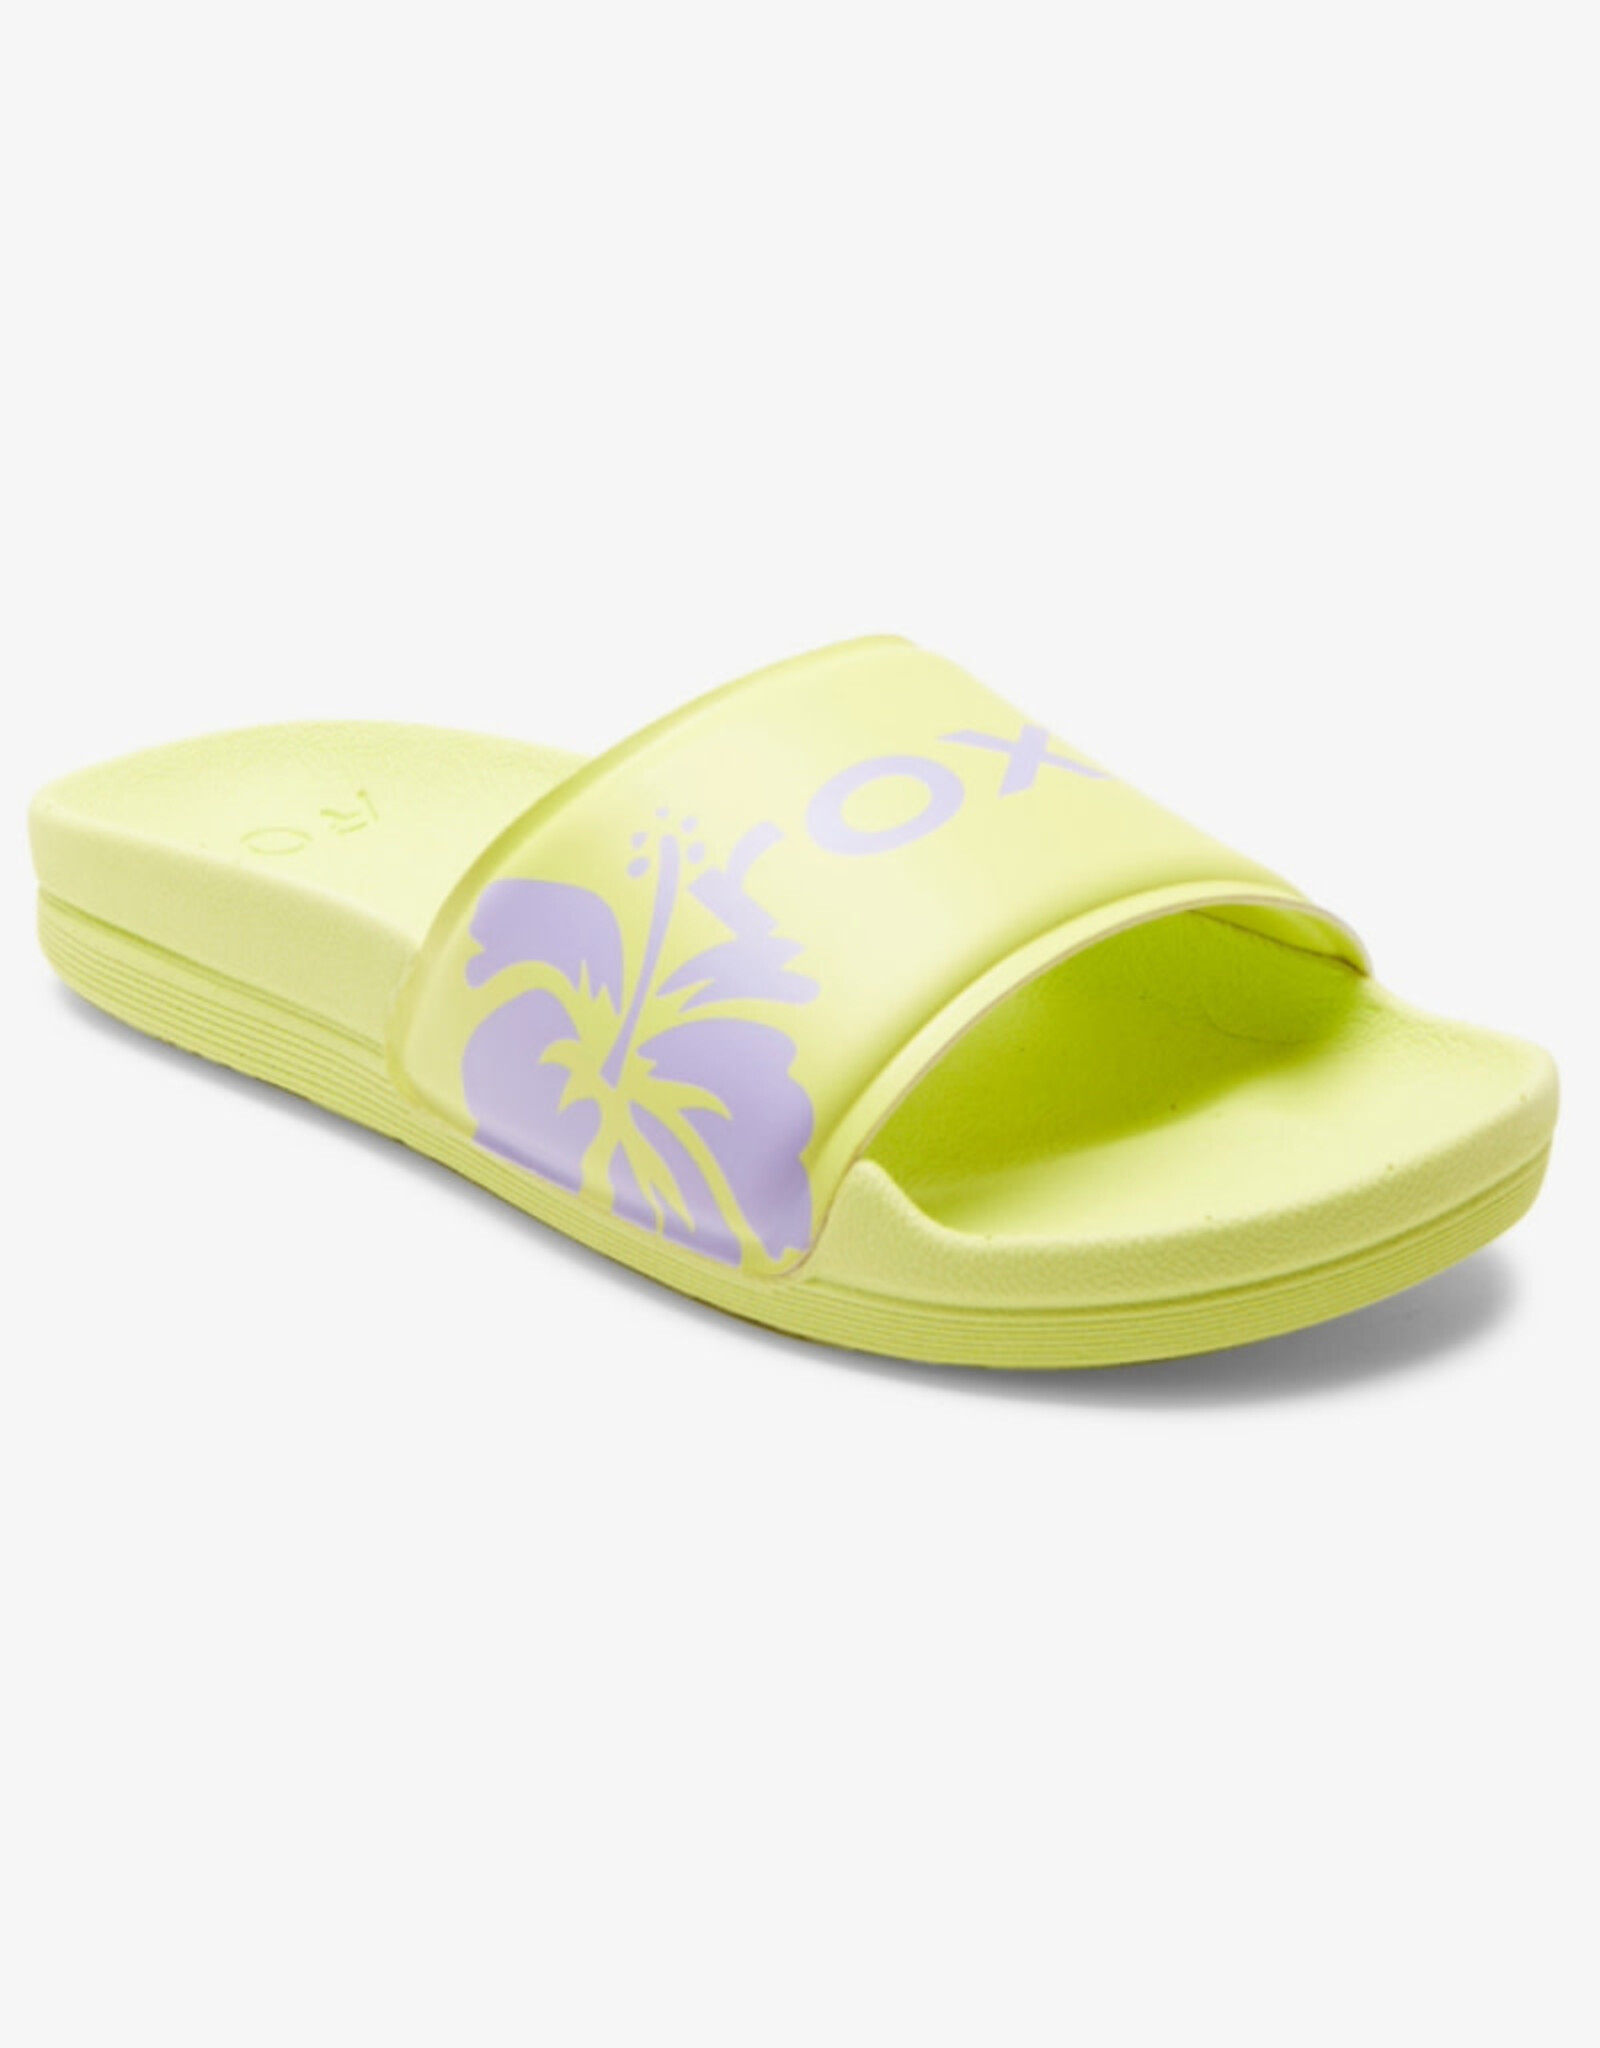 Roxy Roxy Surf.Kind.Kate. Slippy Sandals Neon Yellow